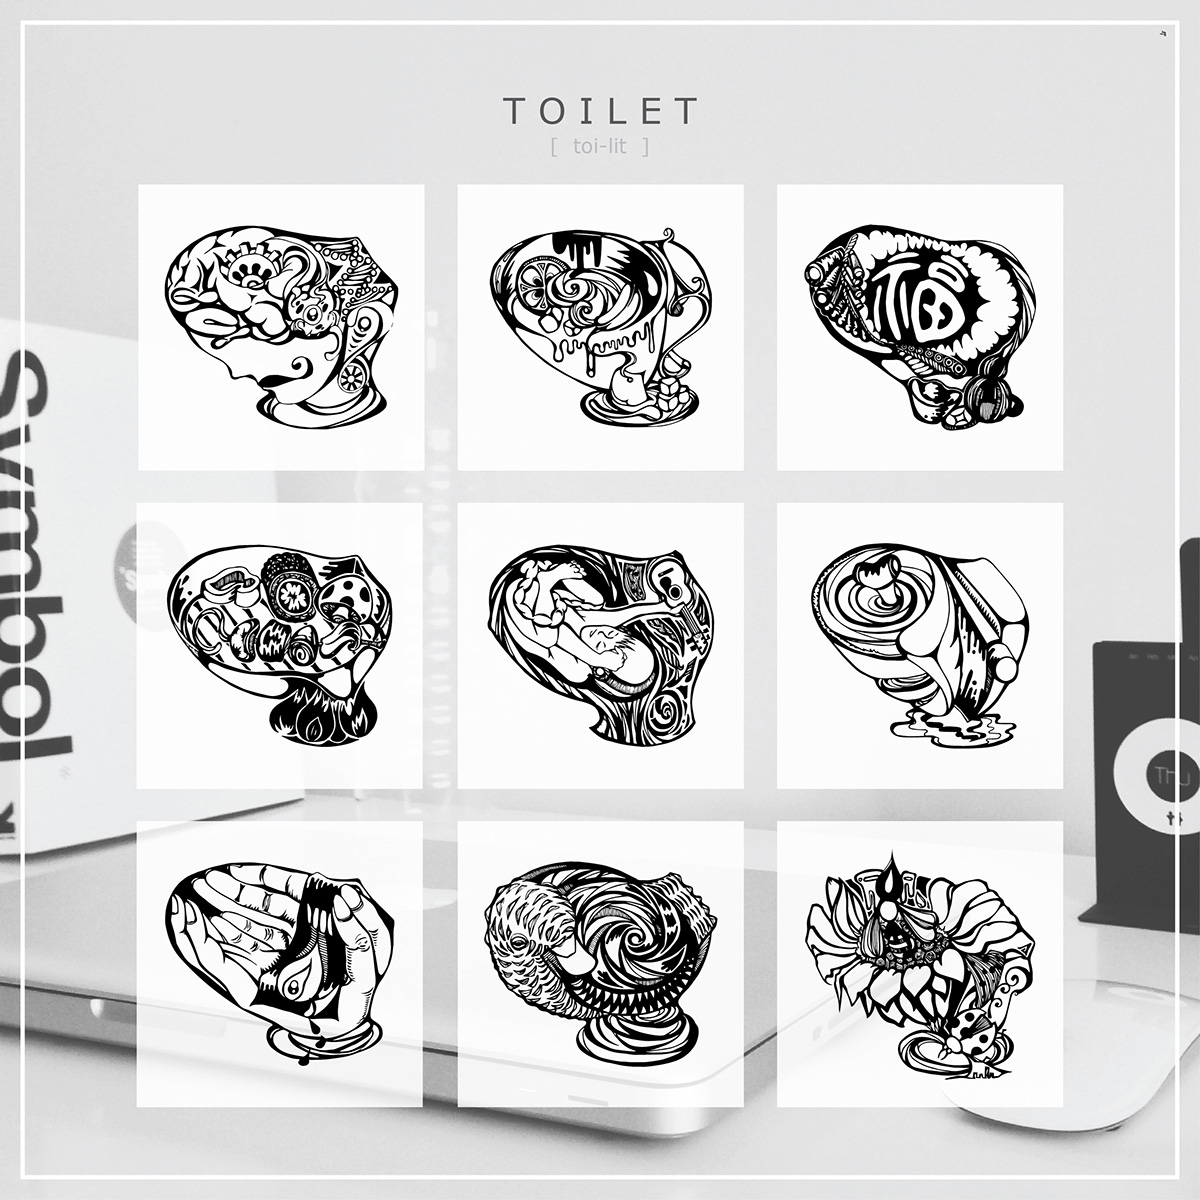 toilet shaping creative thinking